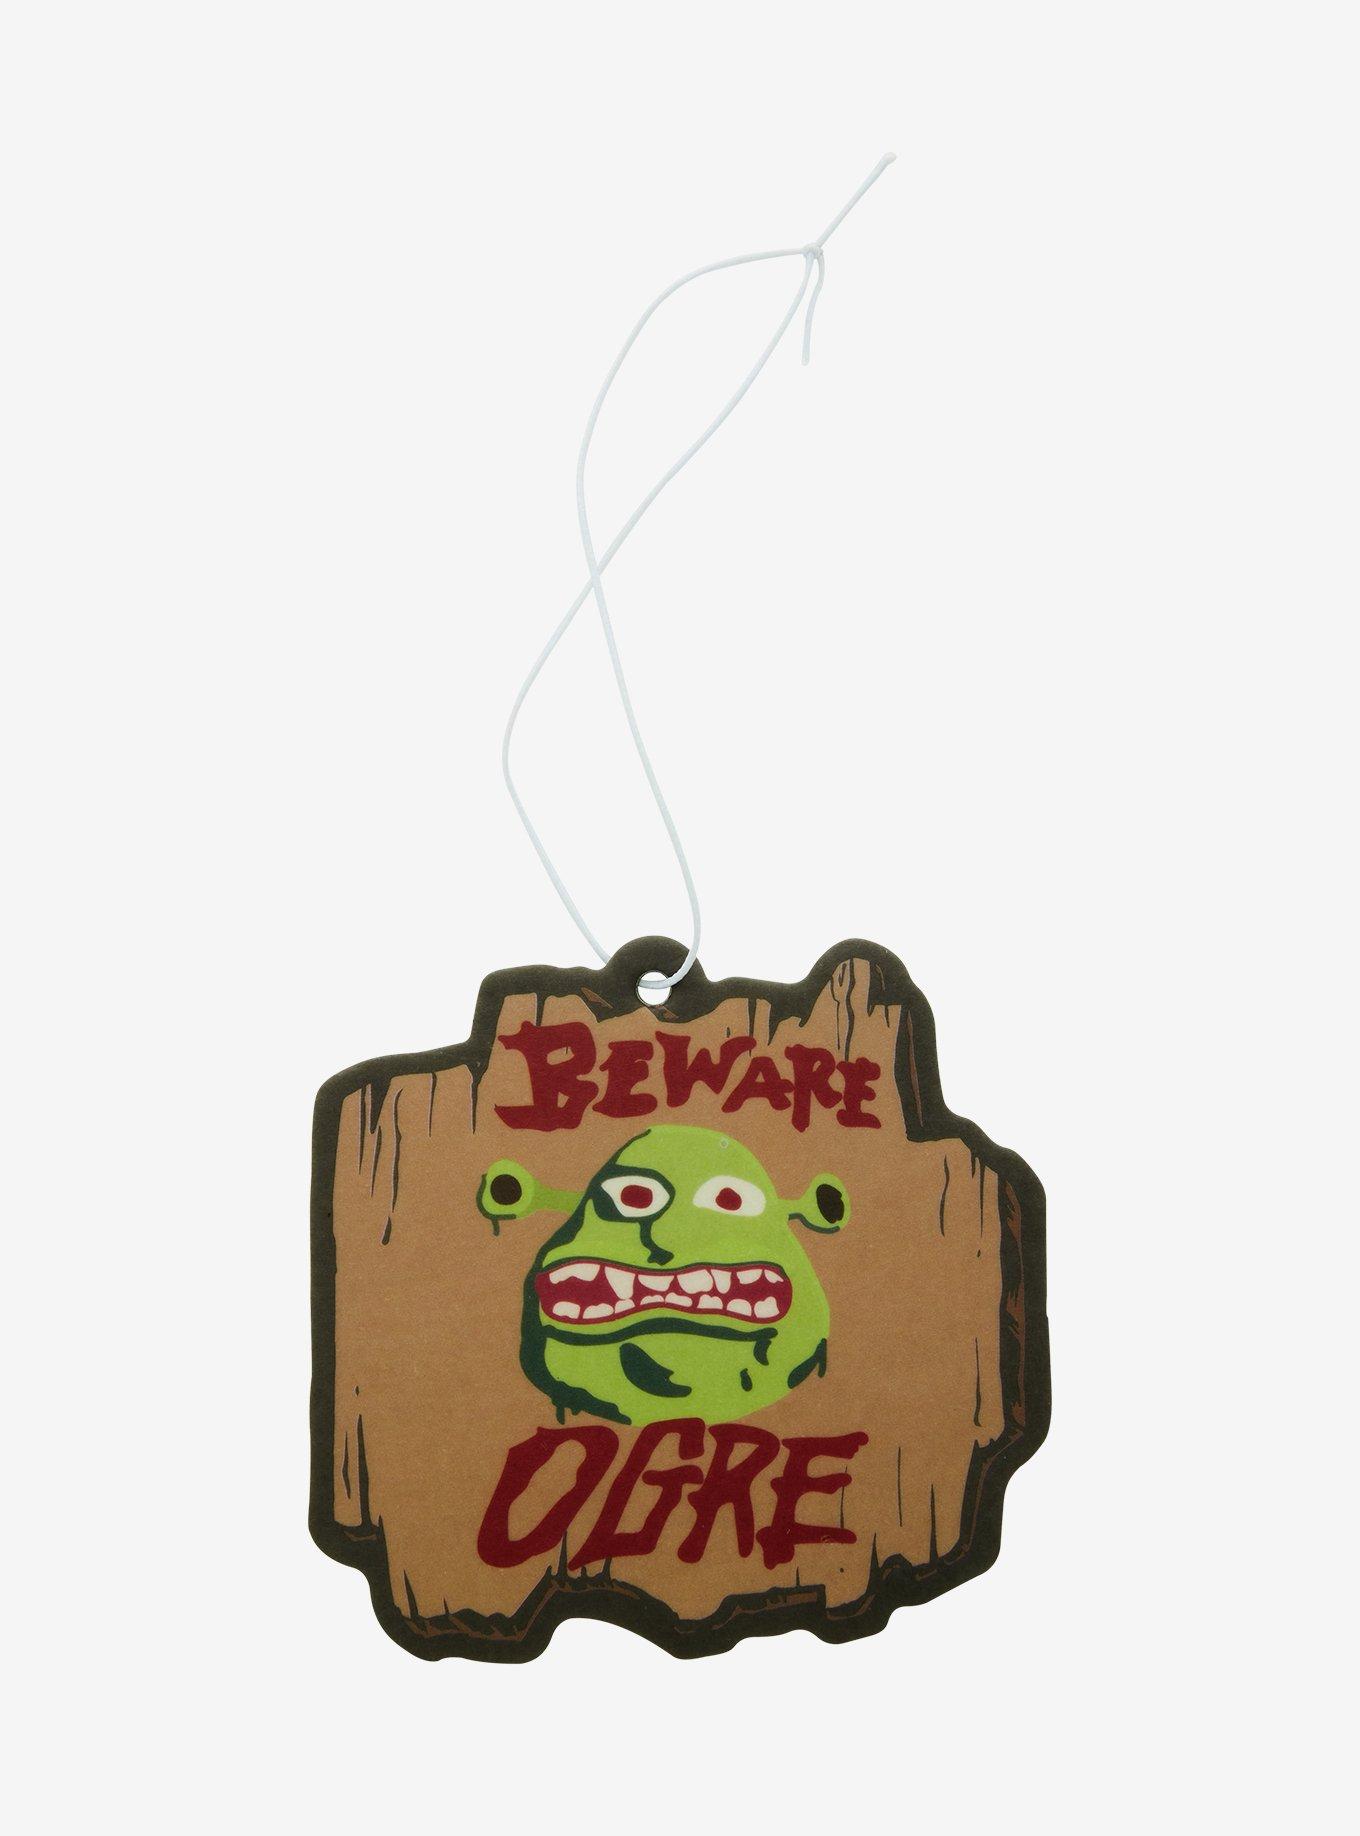 Shrek Beware Ogre Wooden Sign Green Apple Scented Air Freshener, , hi-res